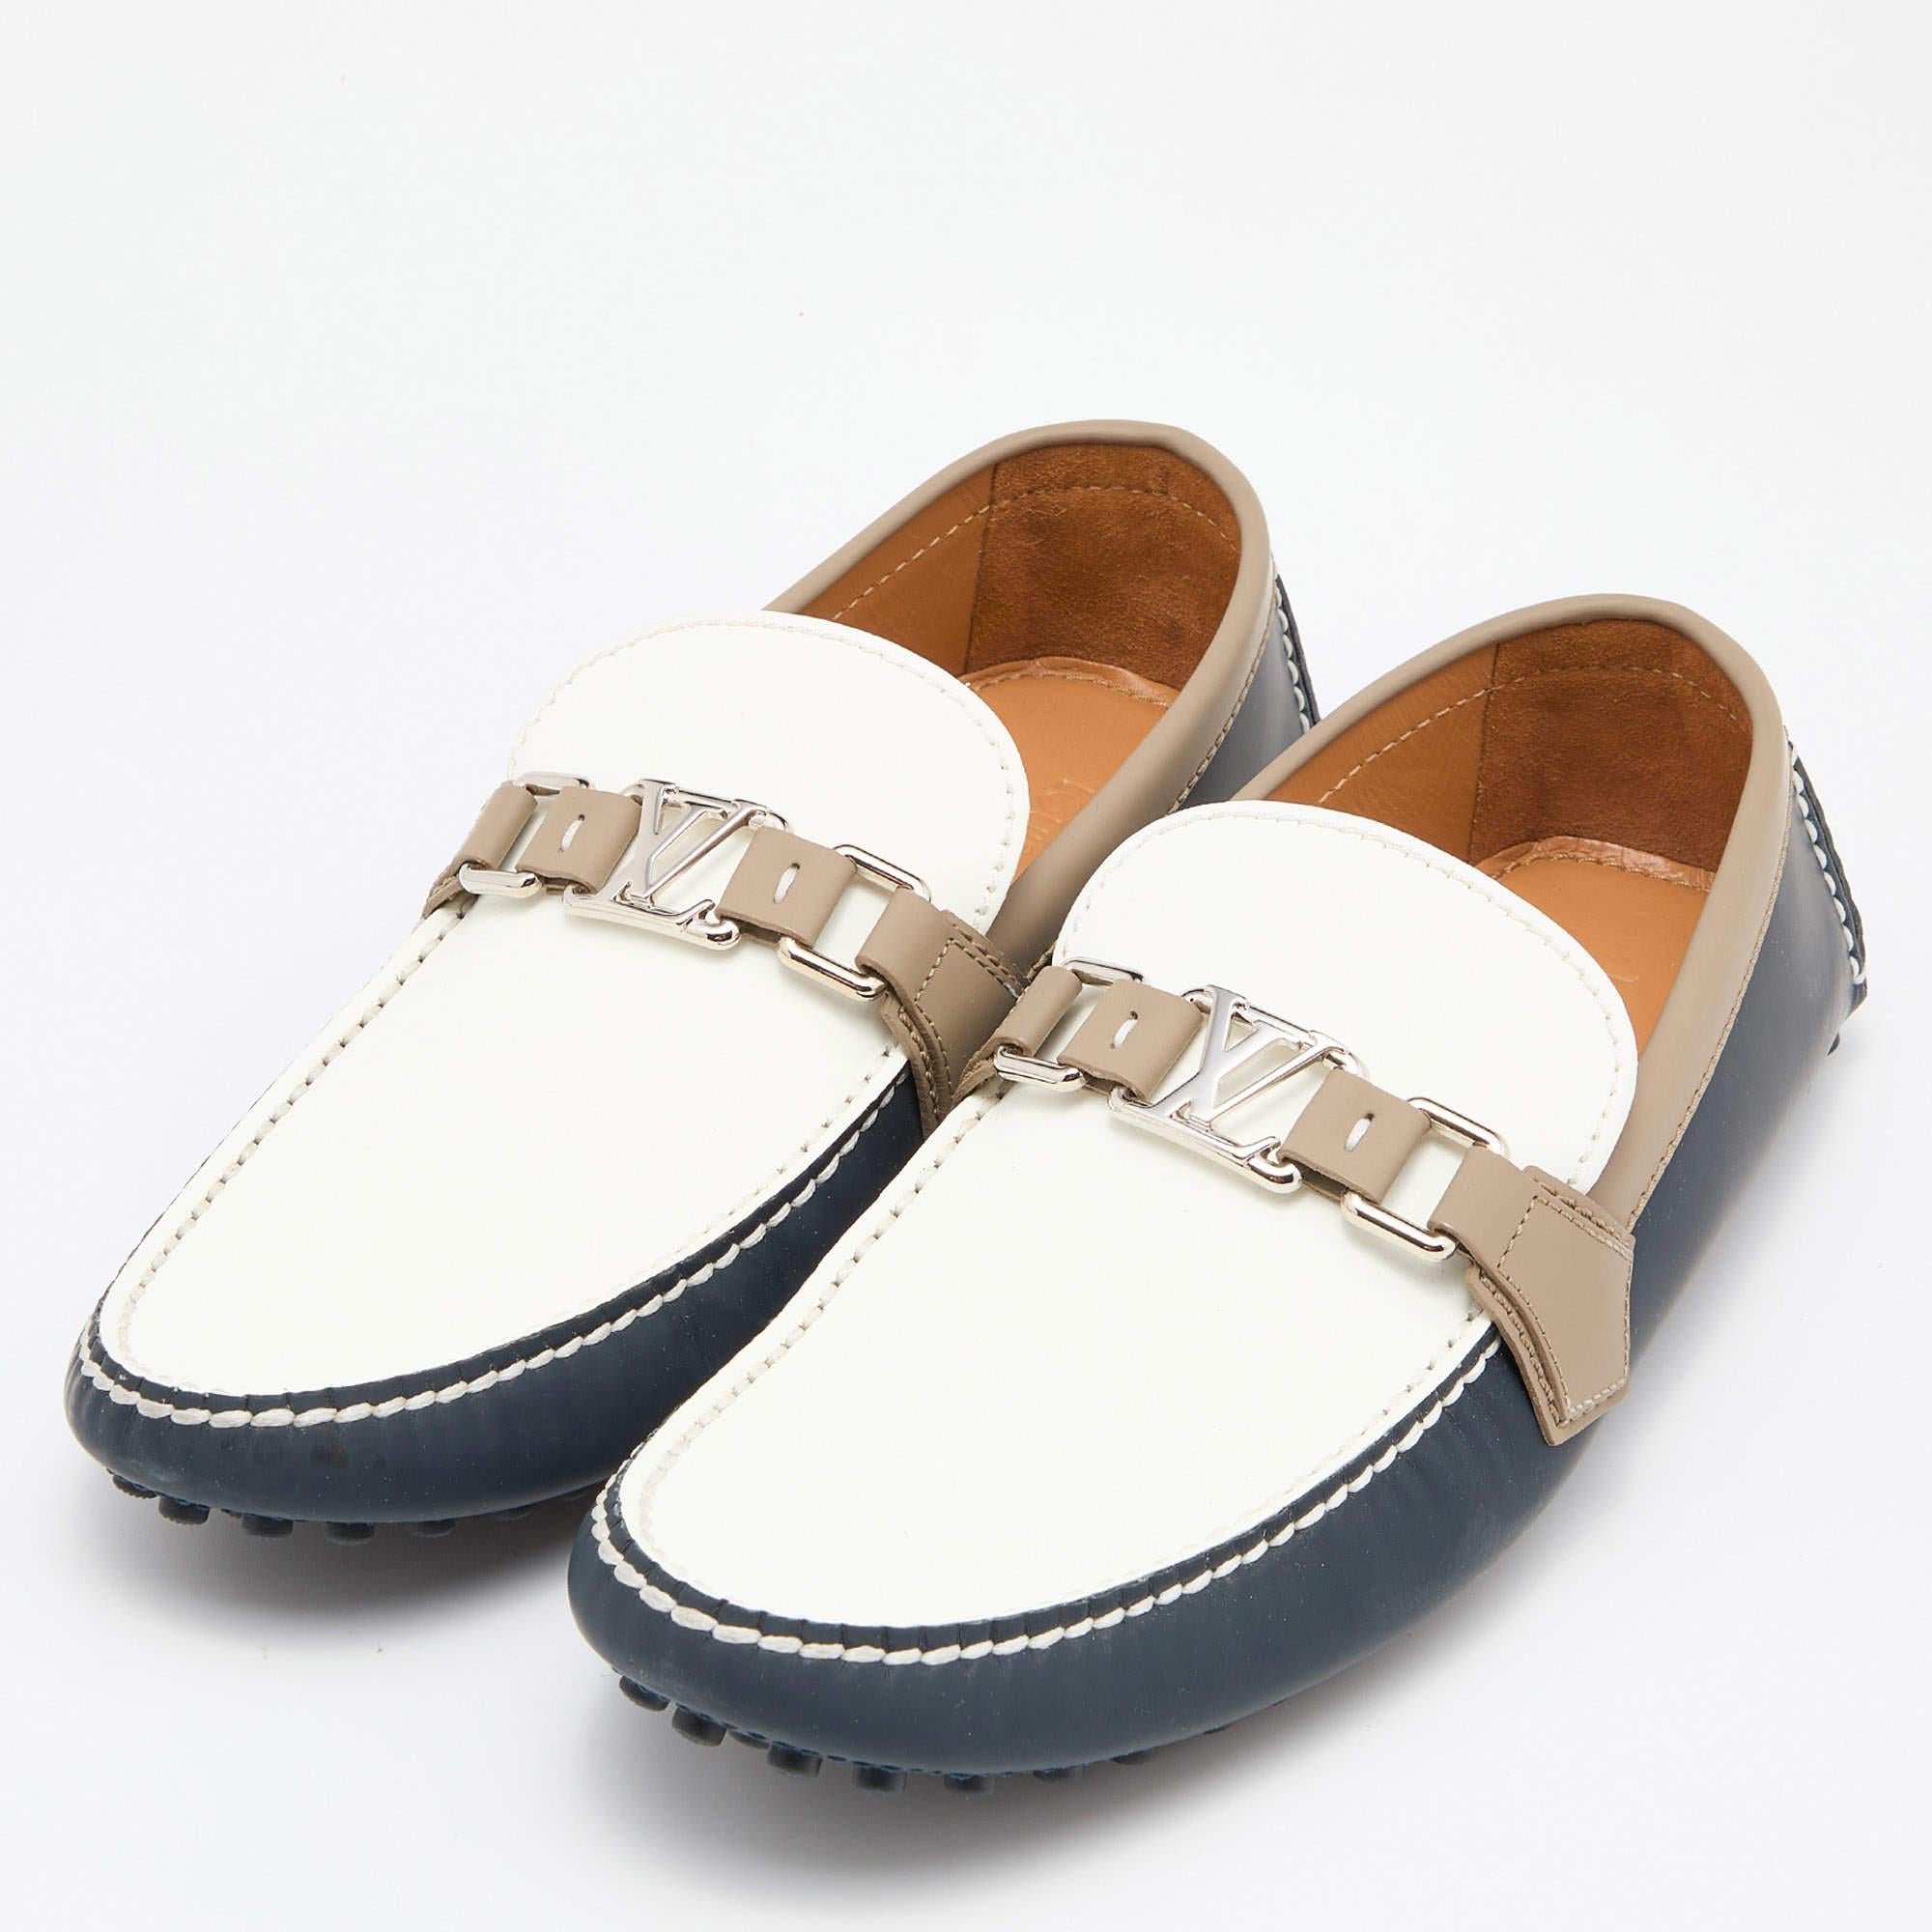 Men's Louis Vuitton Tricolor Leather Hockenheim Loafers Size 42.5